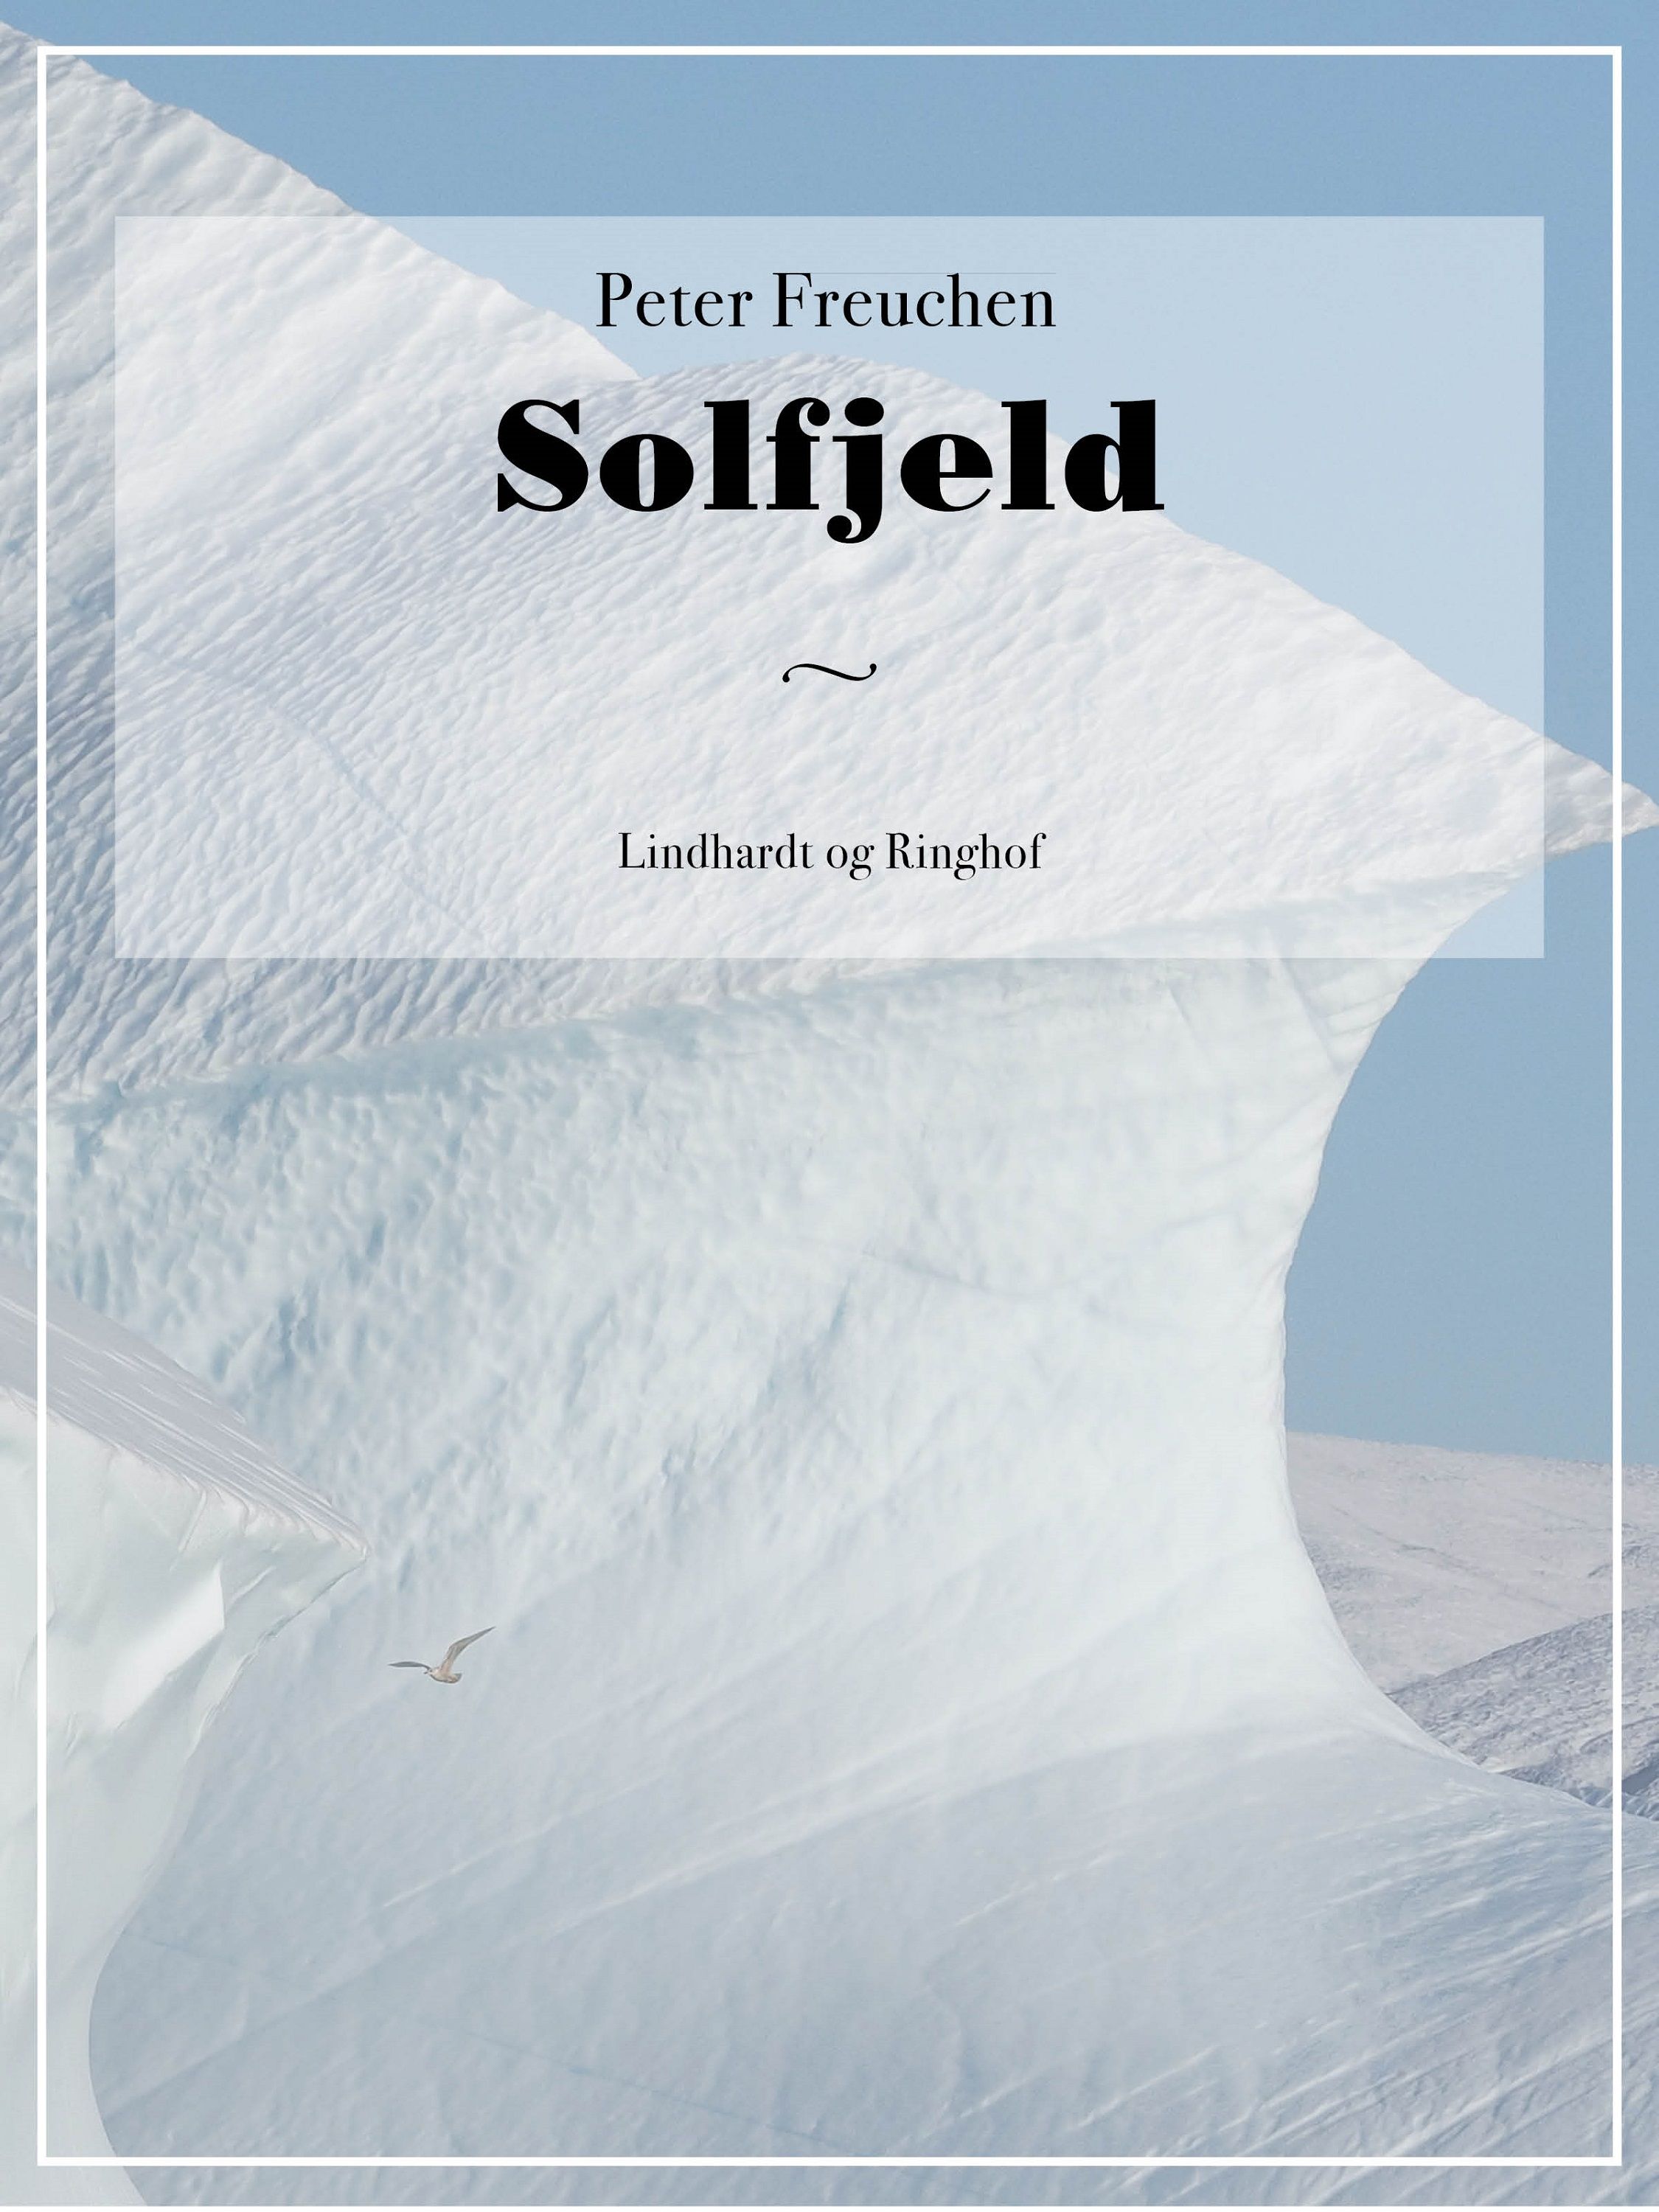 Solfjeld, ljudbok av Peter Freuchen